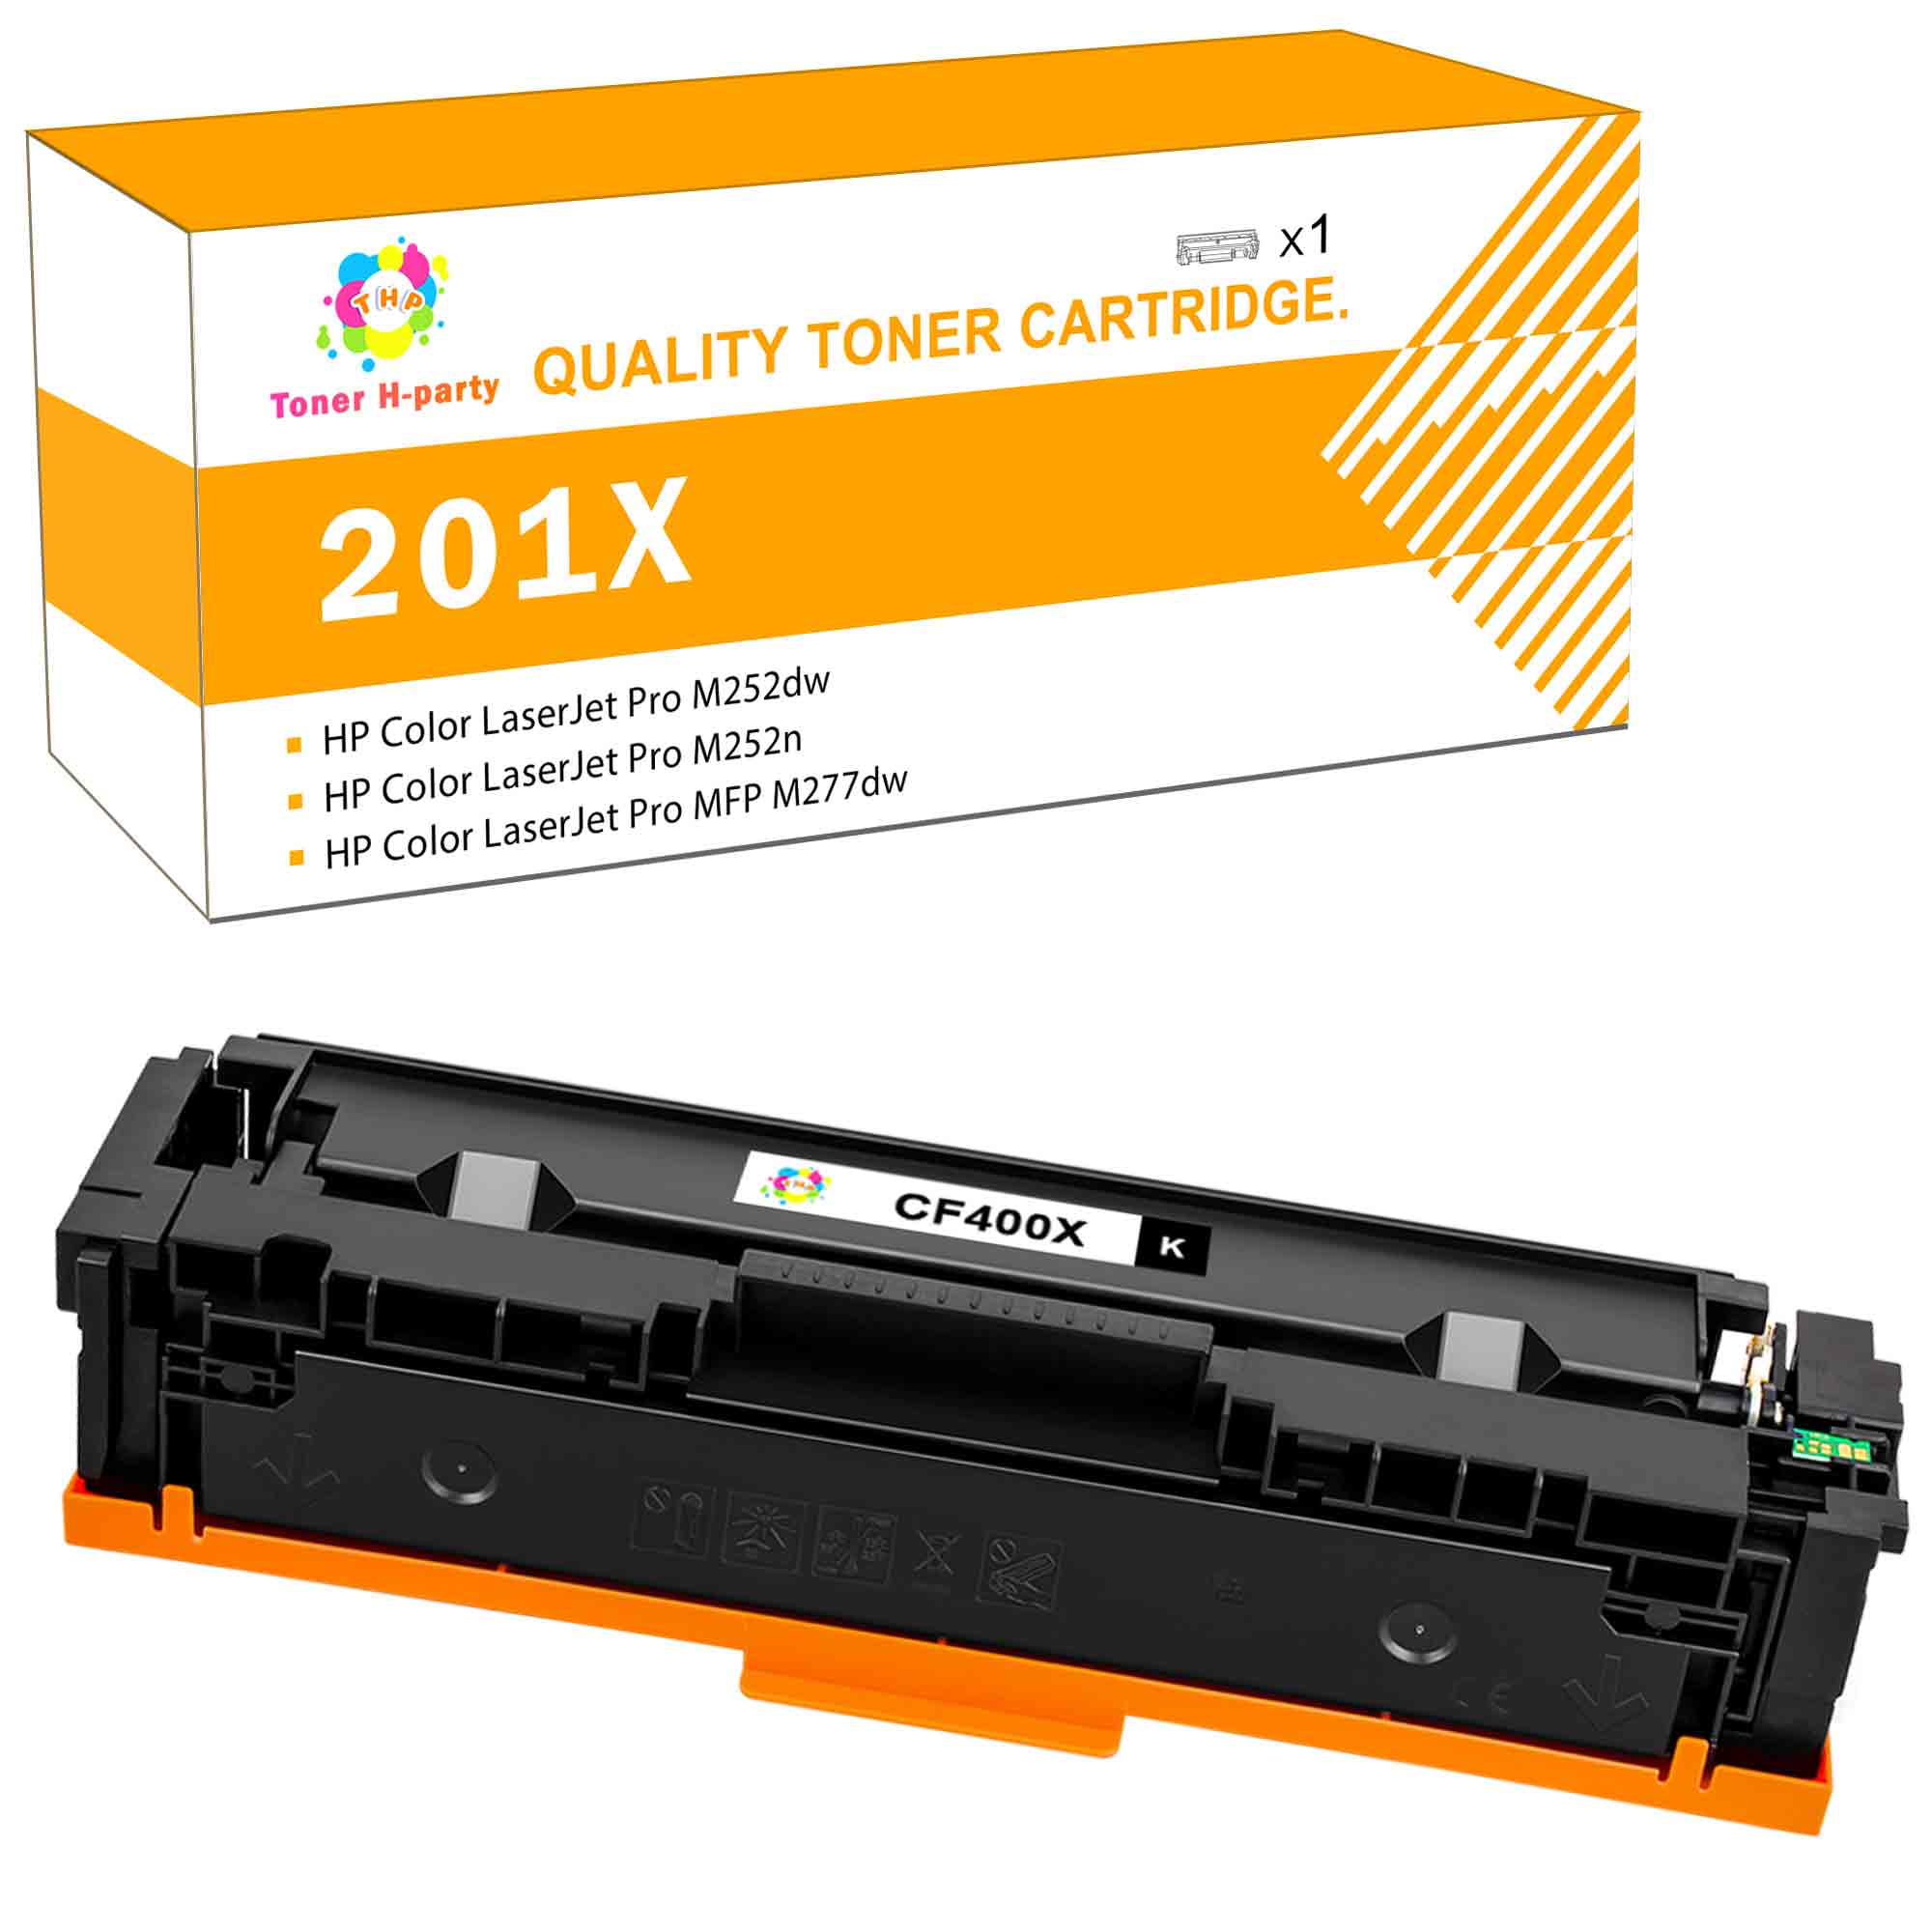 201A 201X Toner Cartridges for HP 201X CF400X CF400A 202A Toner Cartridge for Color Laserjet Pro MFP M277dw M277c6 Printer (Black, 1-Pack) - Walmart.com